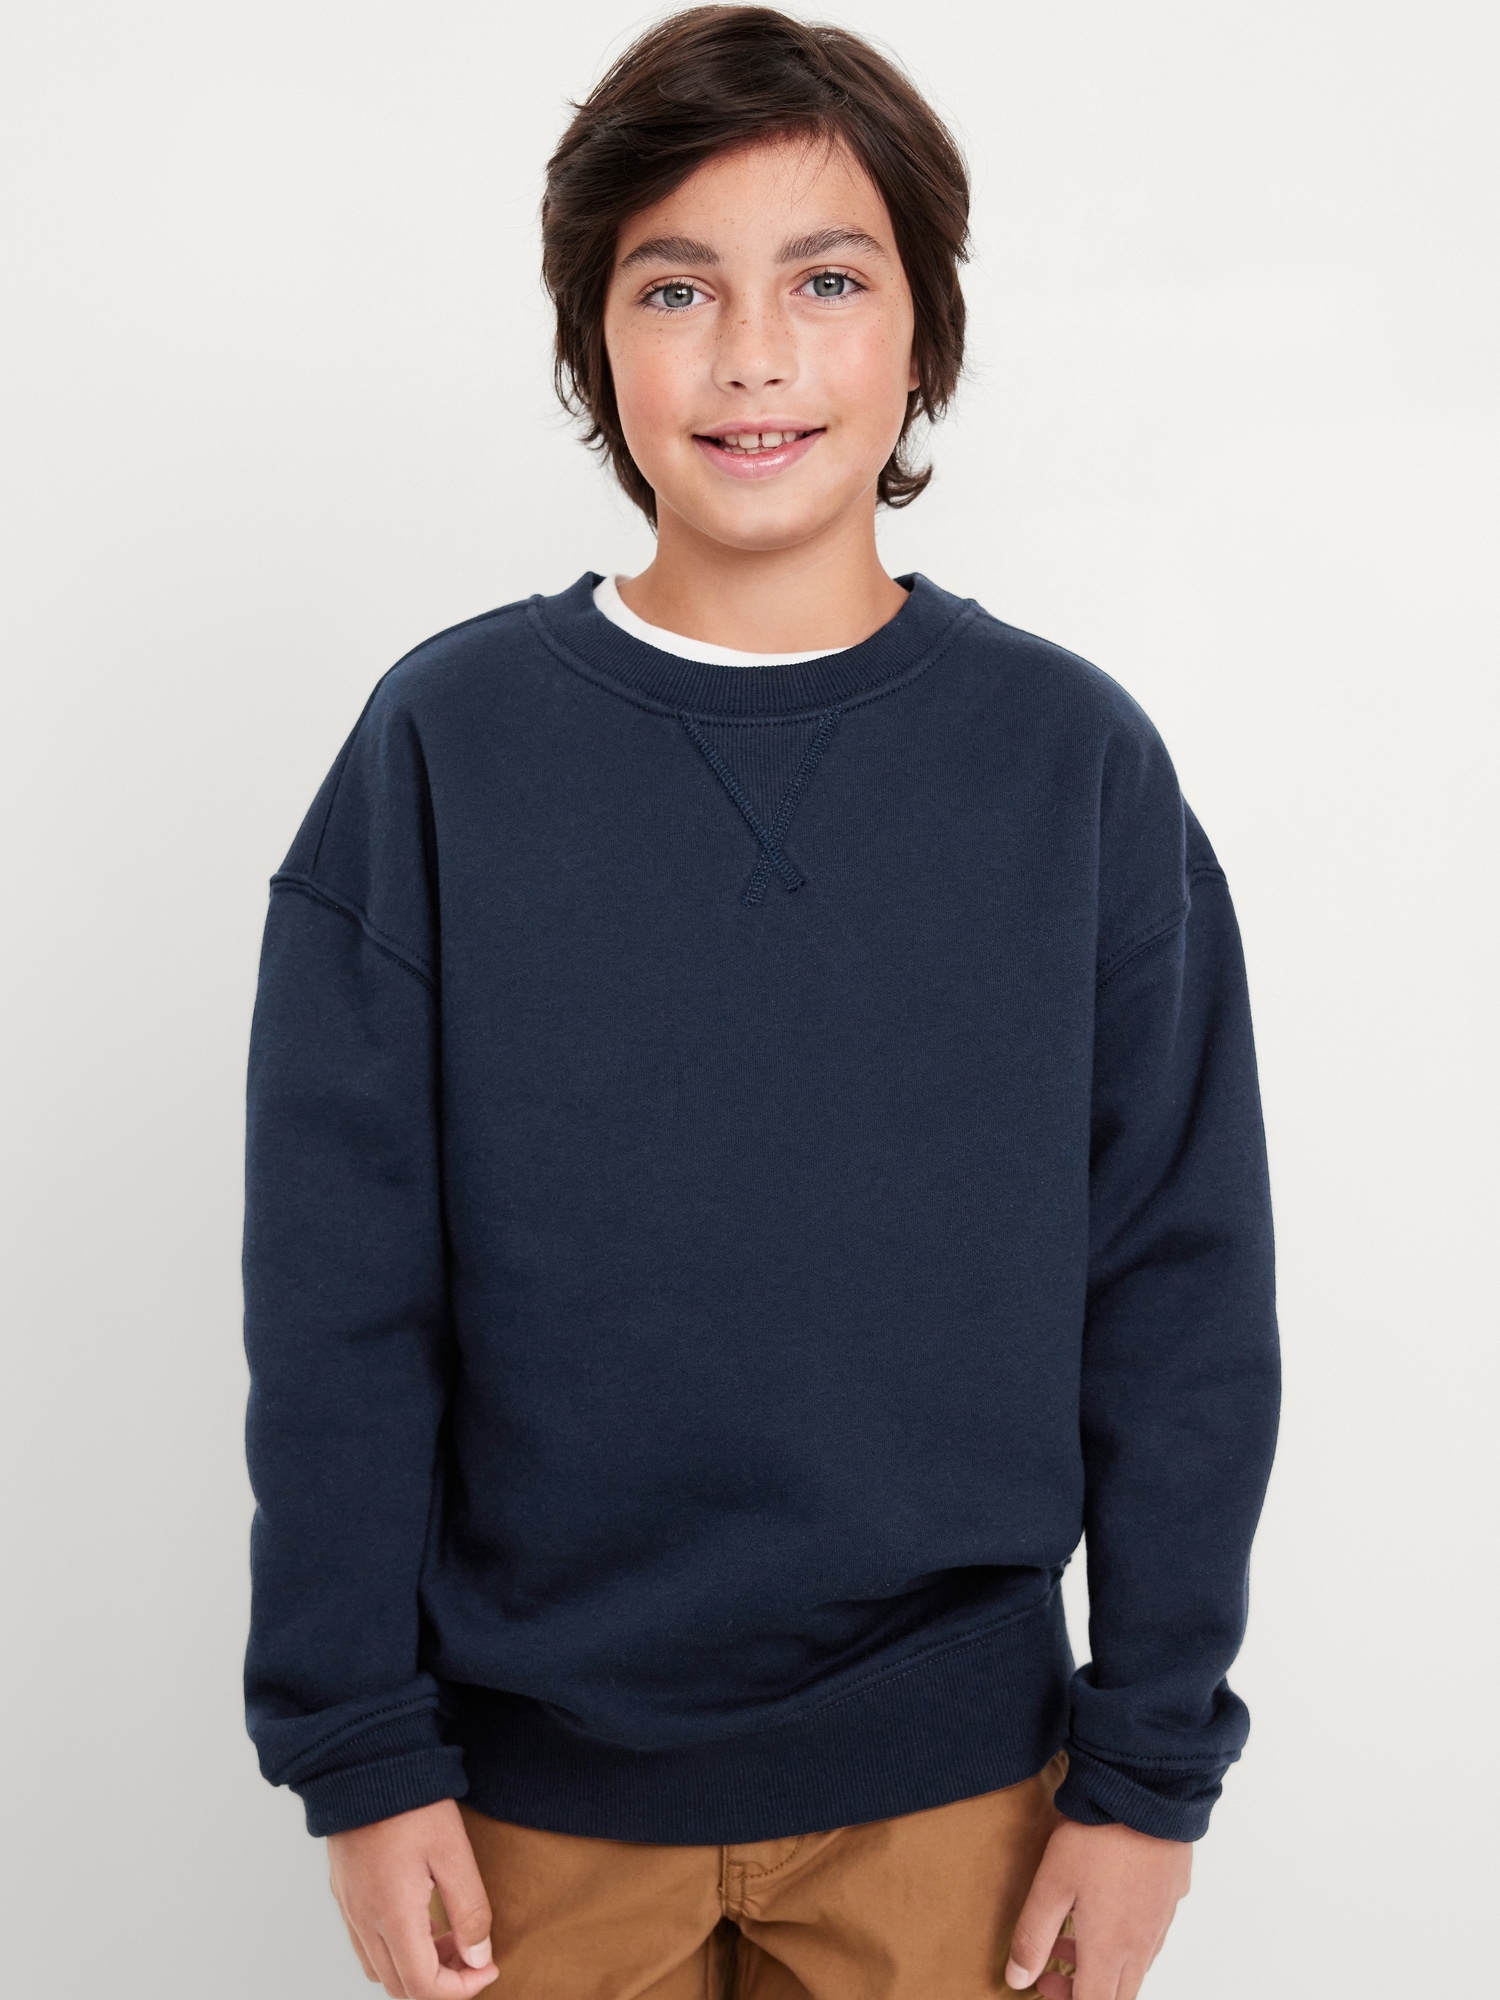 Oversized Crew-Neck Sweatshirt for Boys